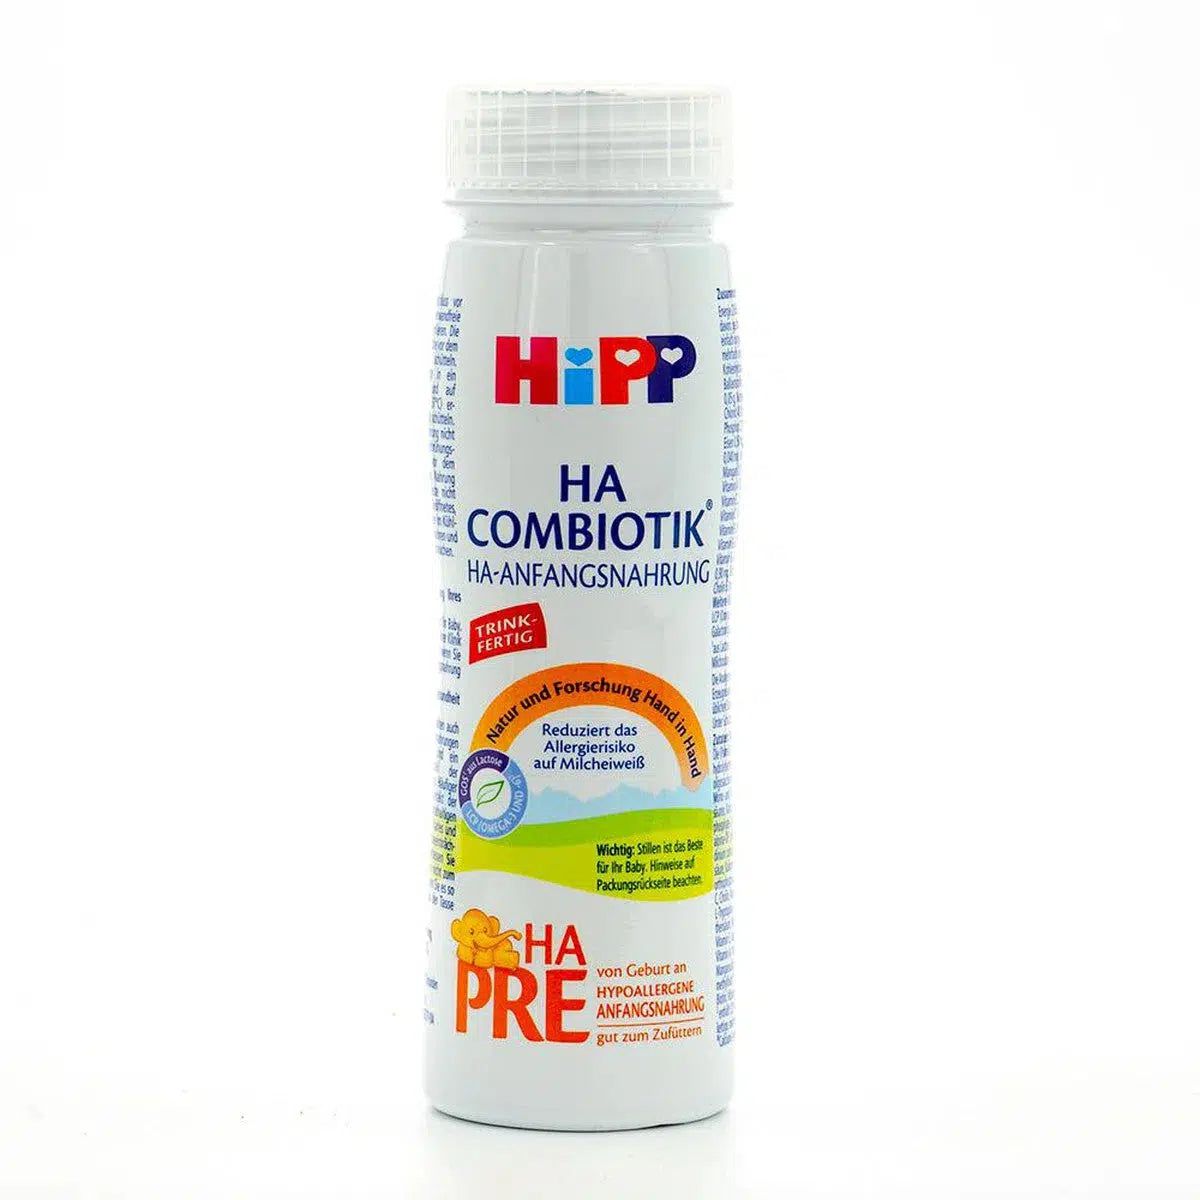 HiPP HA Stage PRE Ready to Feed Formula (200ml) - 90 Bottles